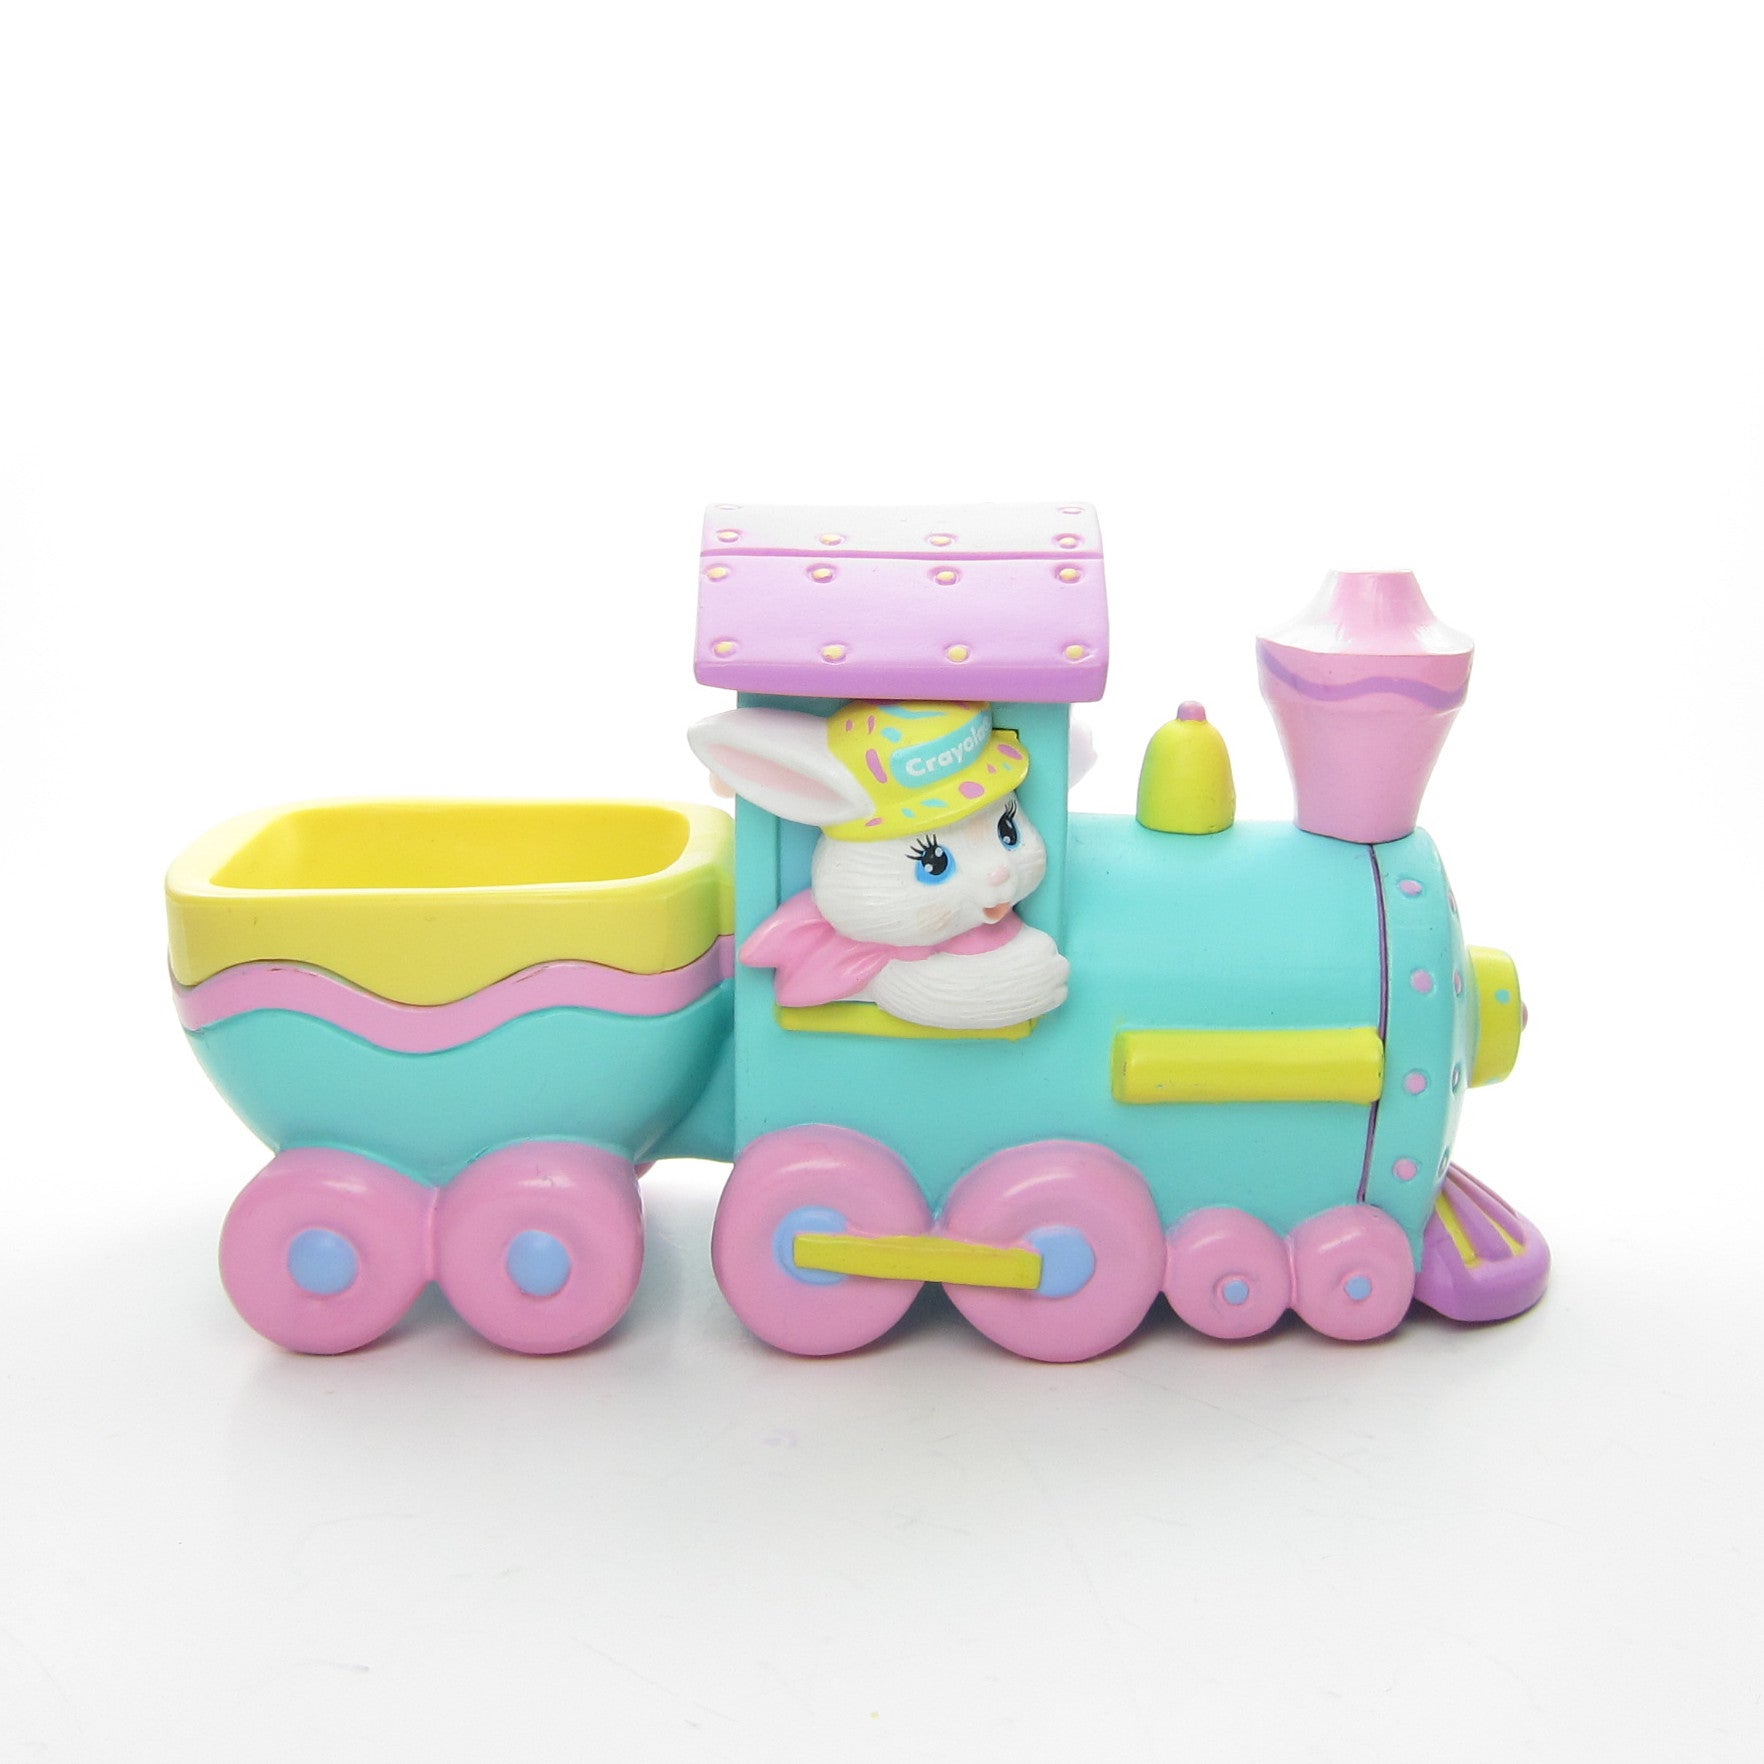 Crayola Bunny Hallmark Easter Eggspress train figurine